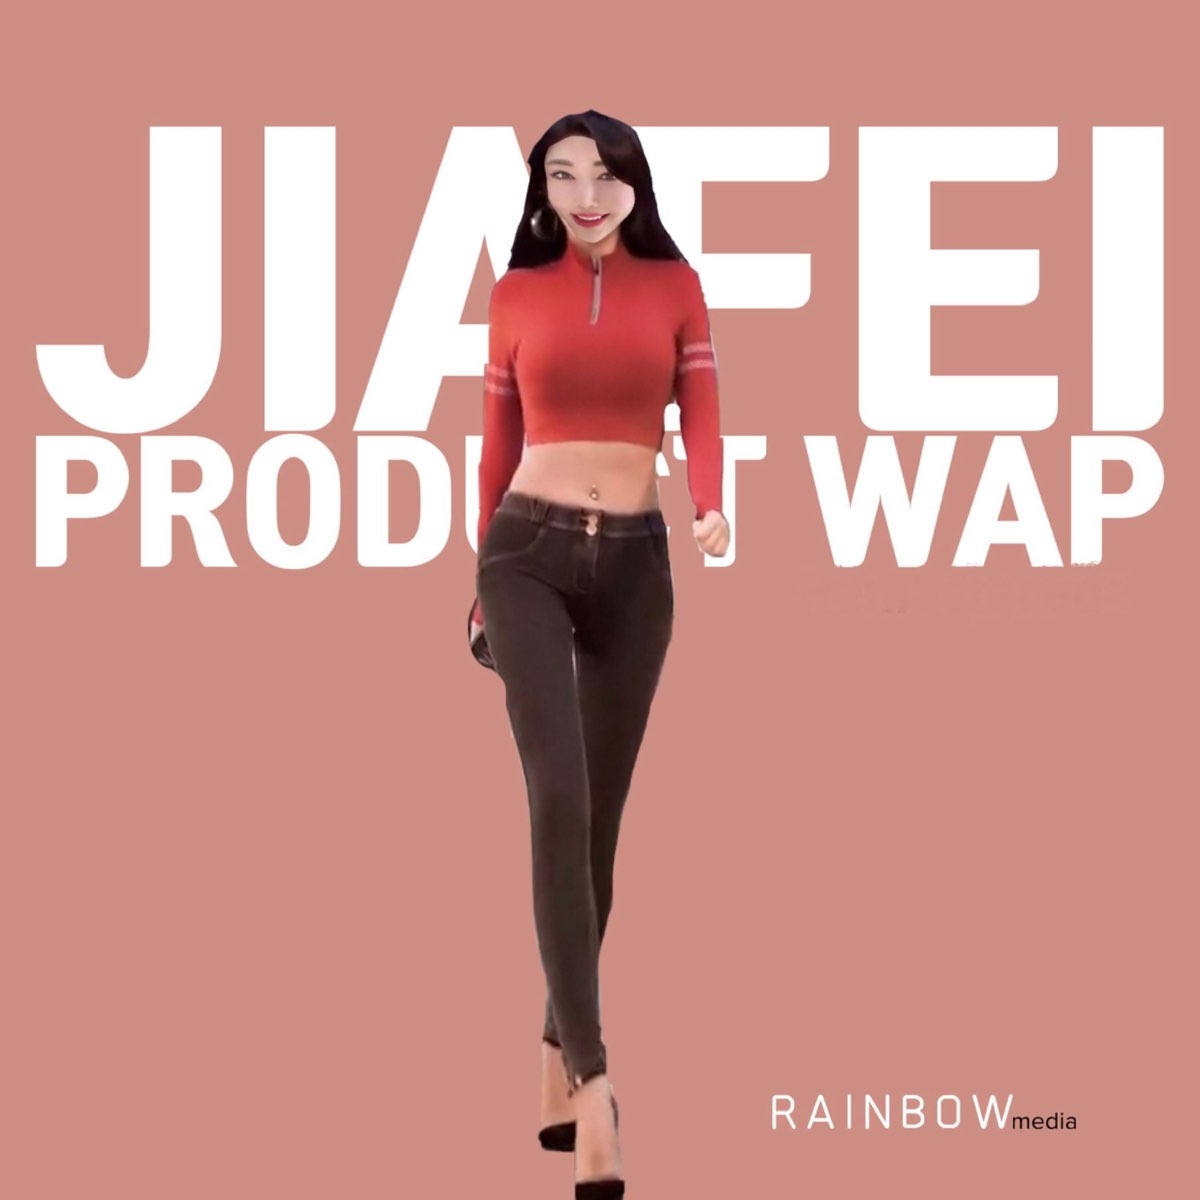 Jiafei Product WAP (8bitMiX Remix) - Single - Album by sunco